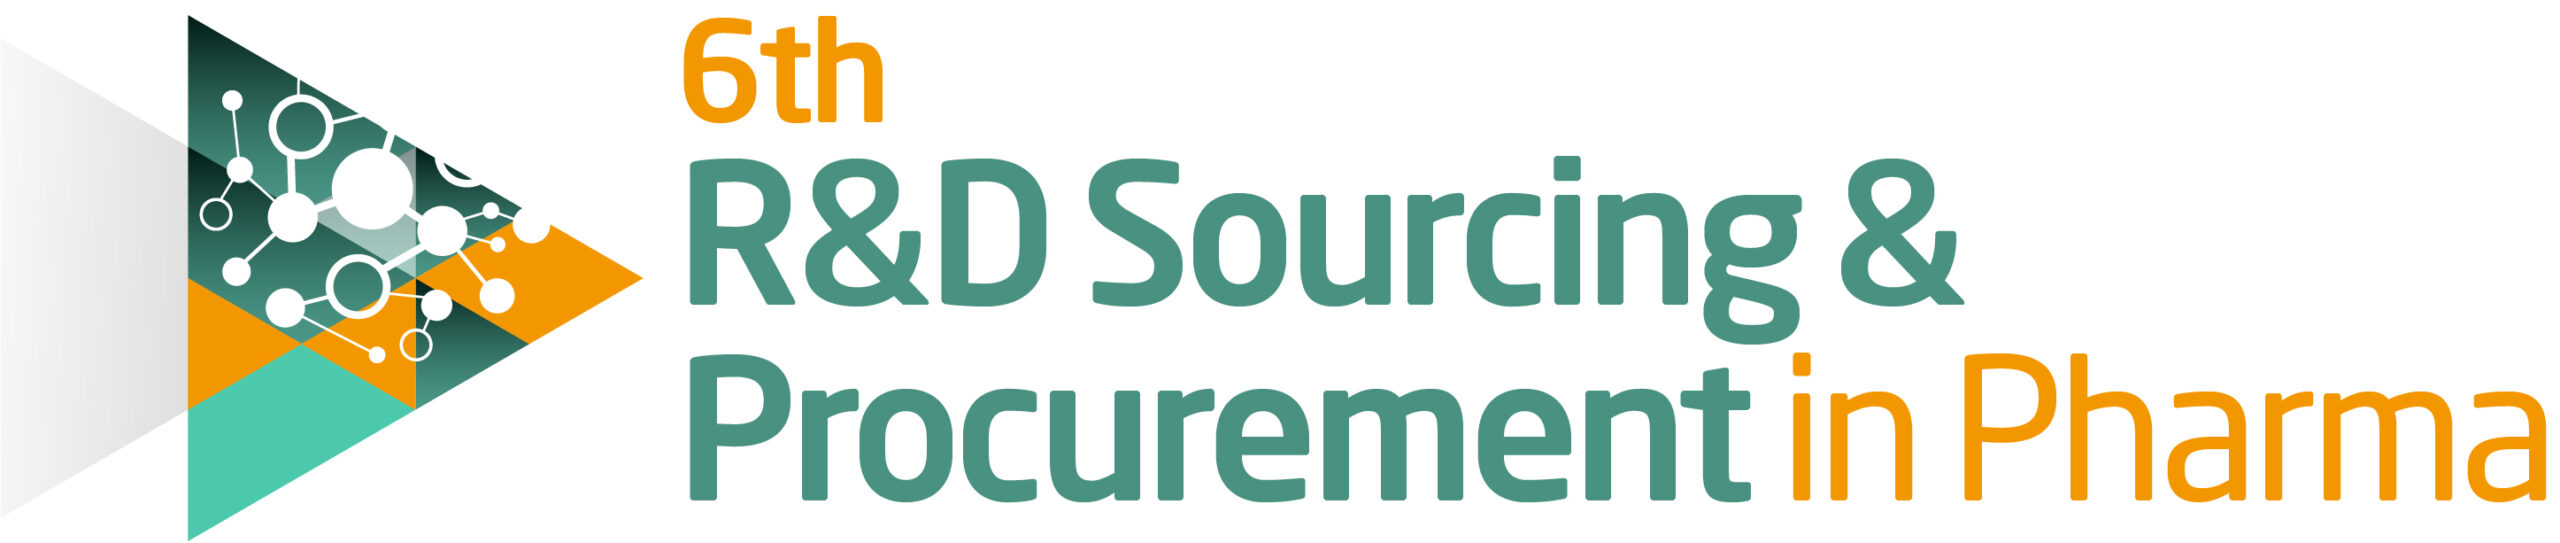 HW211012 6th R&D Procurement & Sourcing in Pharma 2022 logo